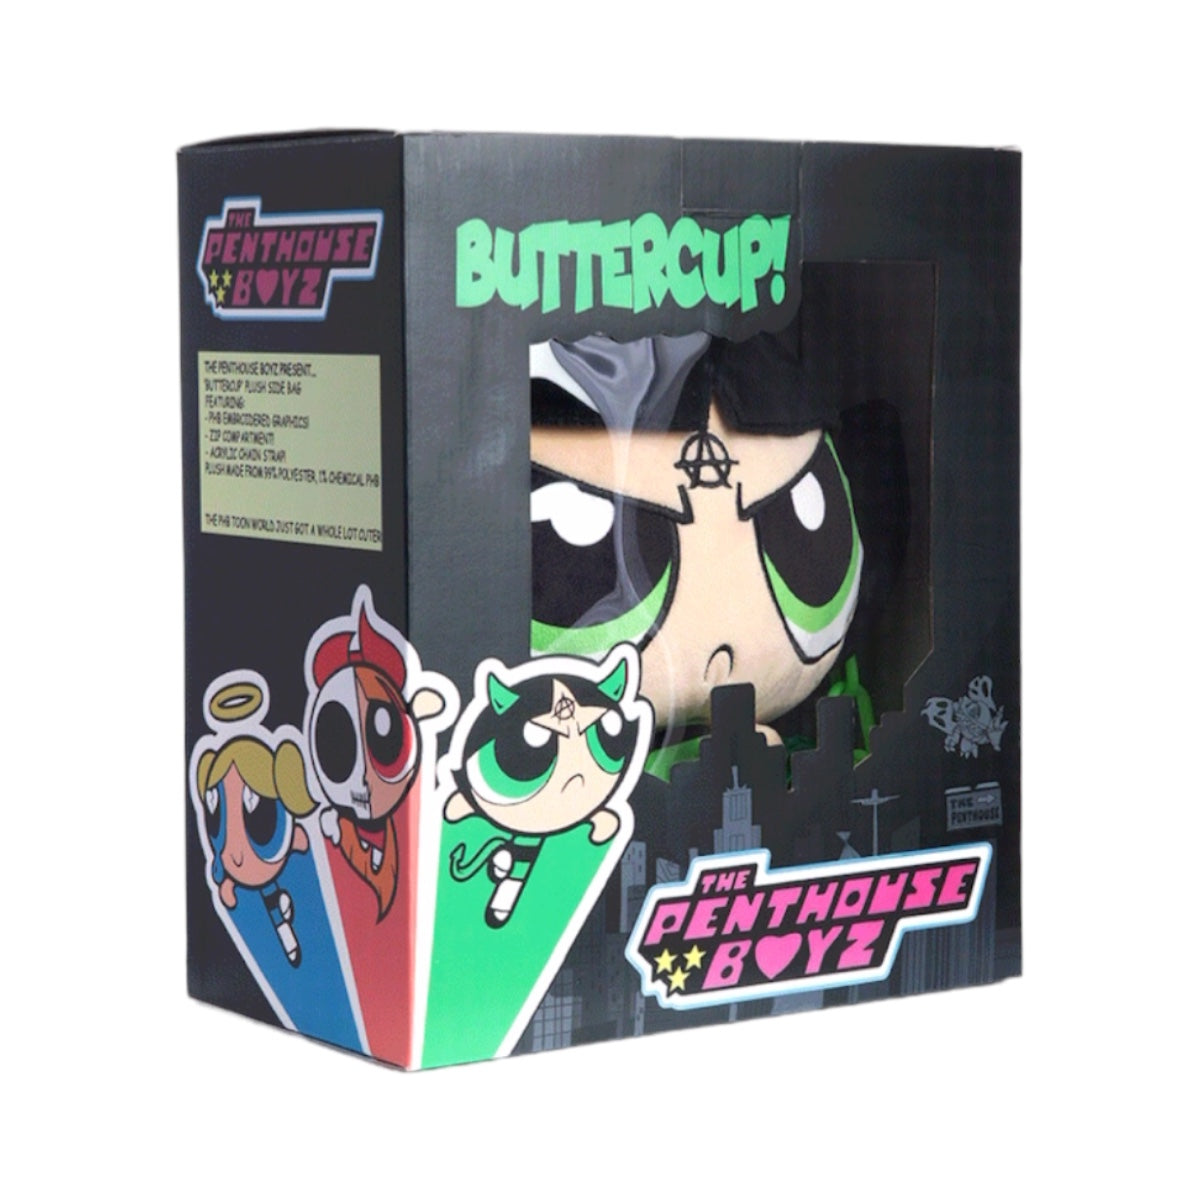 Buttercup Bag - Penthous Boyz